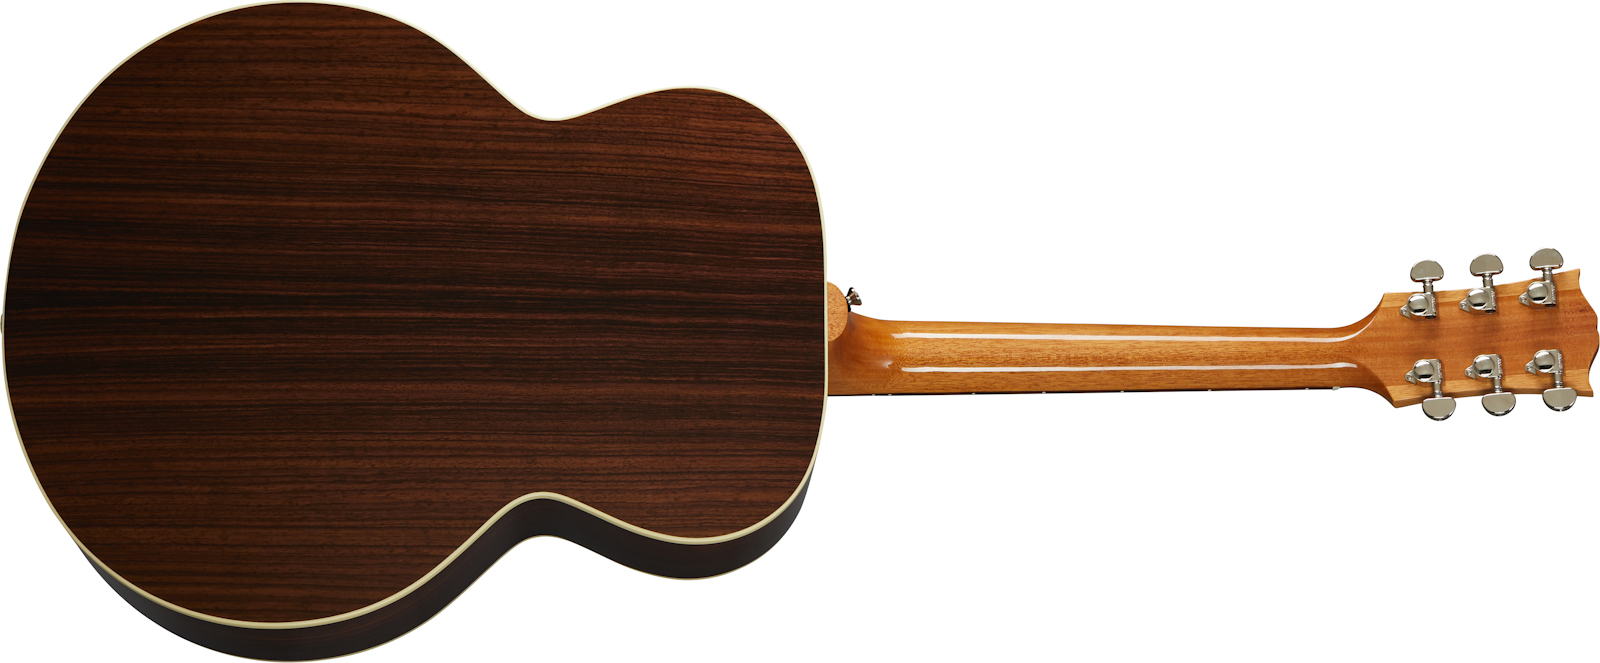 Gibson Sj-200 Studio Rosewood 2020 Super Jumbo Epicea Palissandre Rw - Burst - Electro acoustic guitar - Variation 1